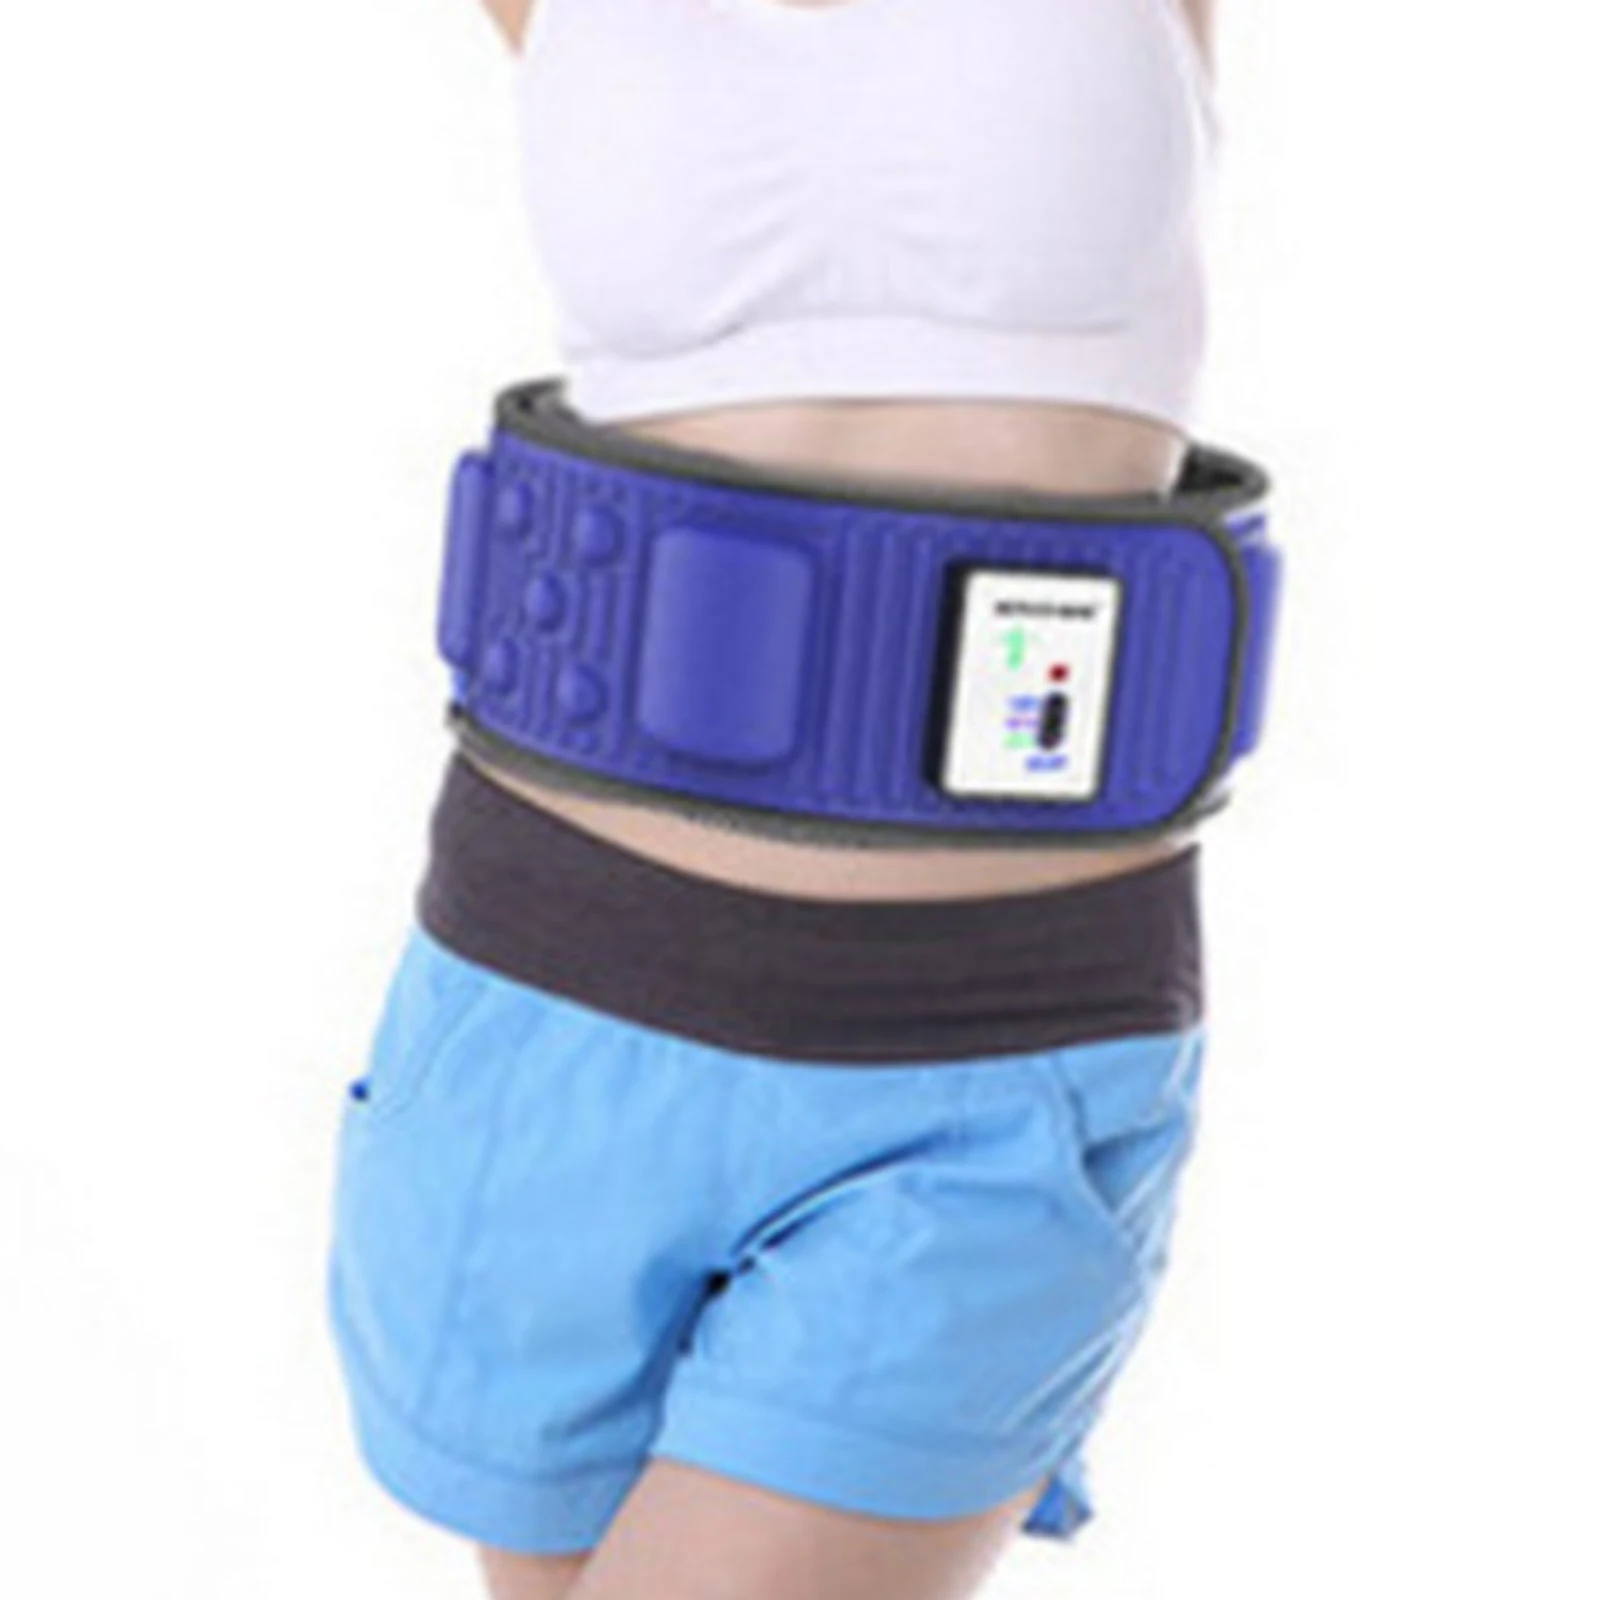 Slimming Belt Stimulator Body Vibrating Waist Massager Gym Fat Burning Abs Stimulator Men Women Workout Fitness